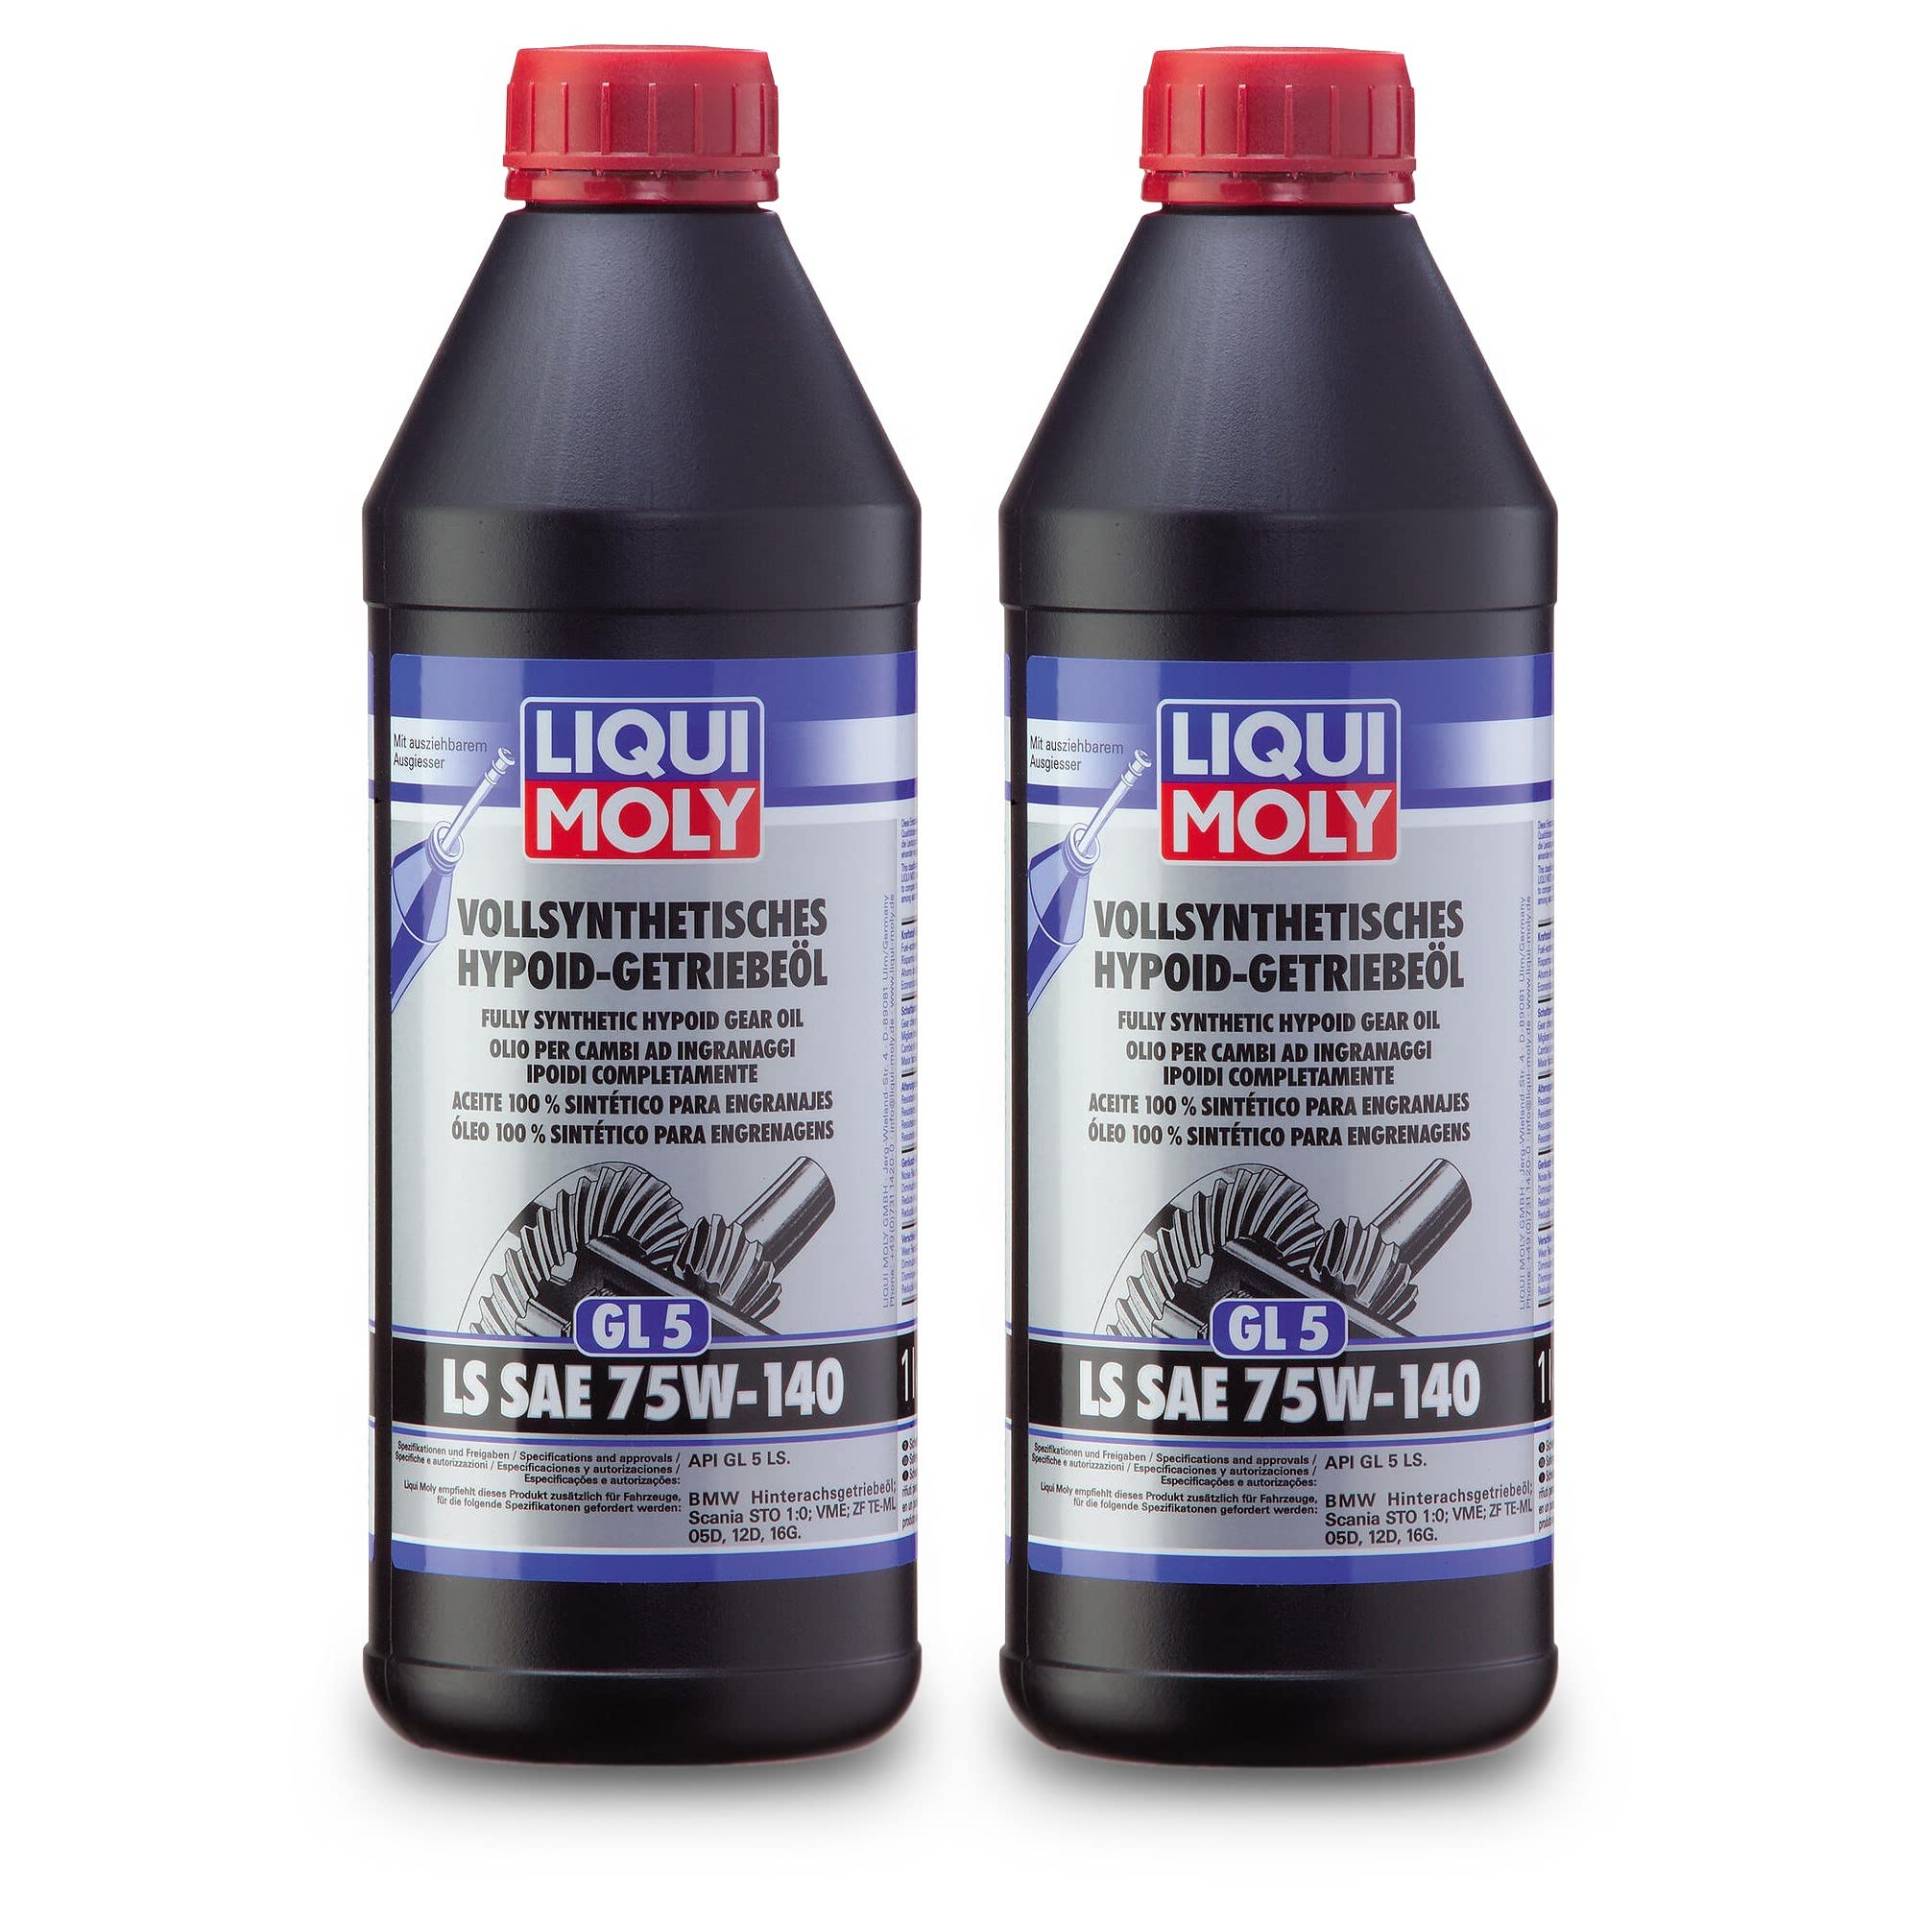 2x LIQUI MOLY 4421 Vollsynthetisches Hypoid-Getriebeöl (GL5) LS SAE 75W-140 1L von LIQUI-MOLY_bundle